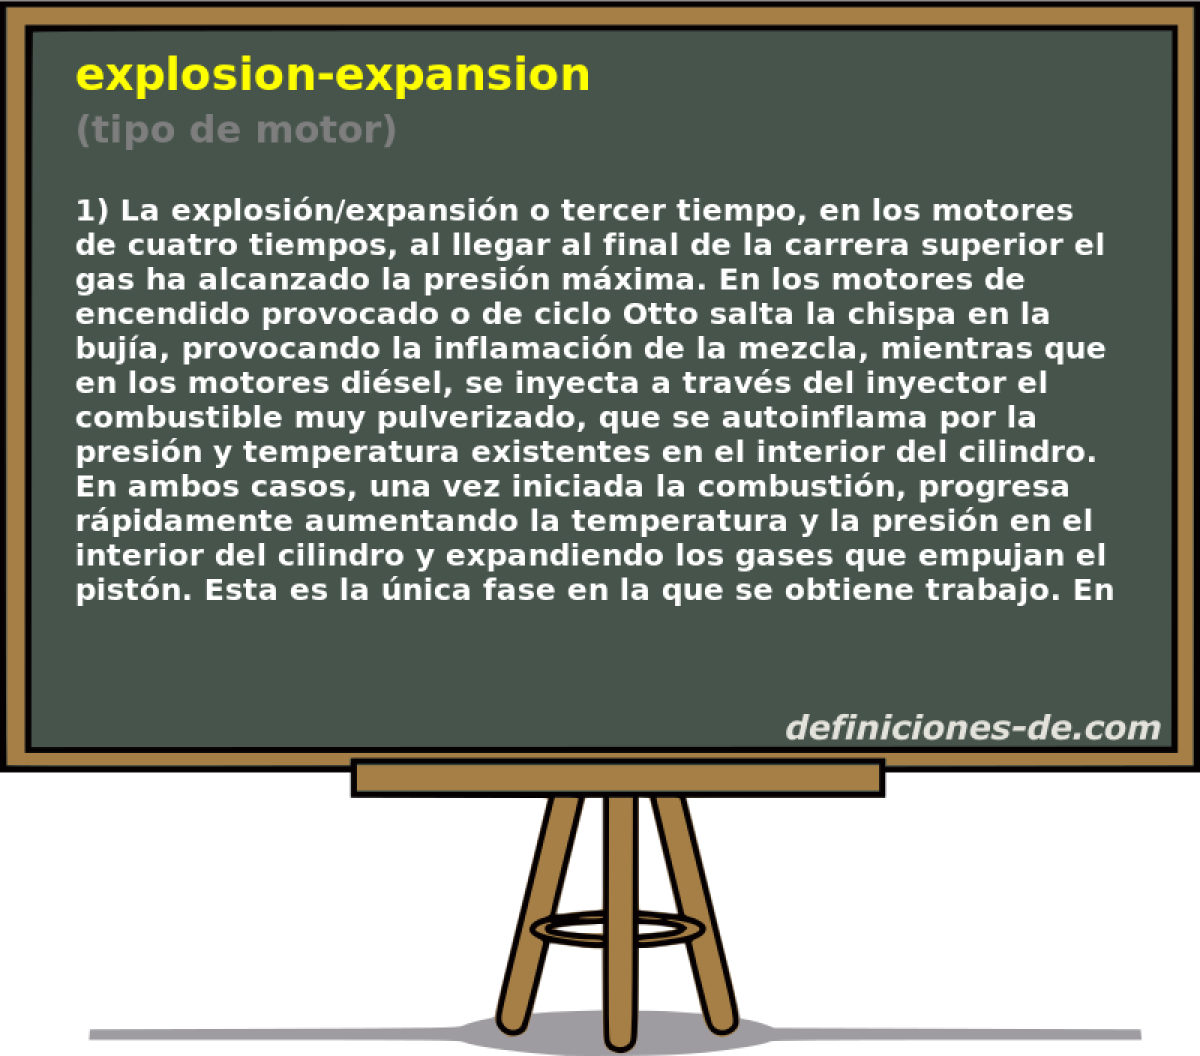 explosion-expansion (tipo de motor)